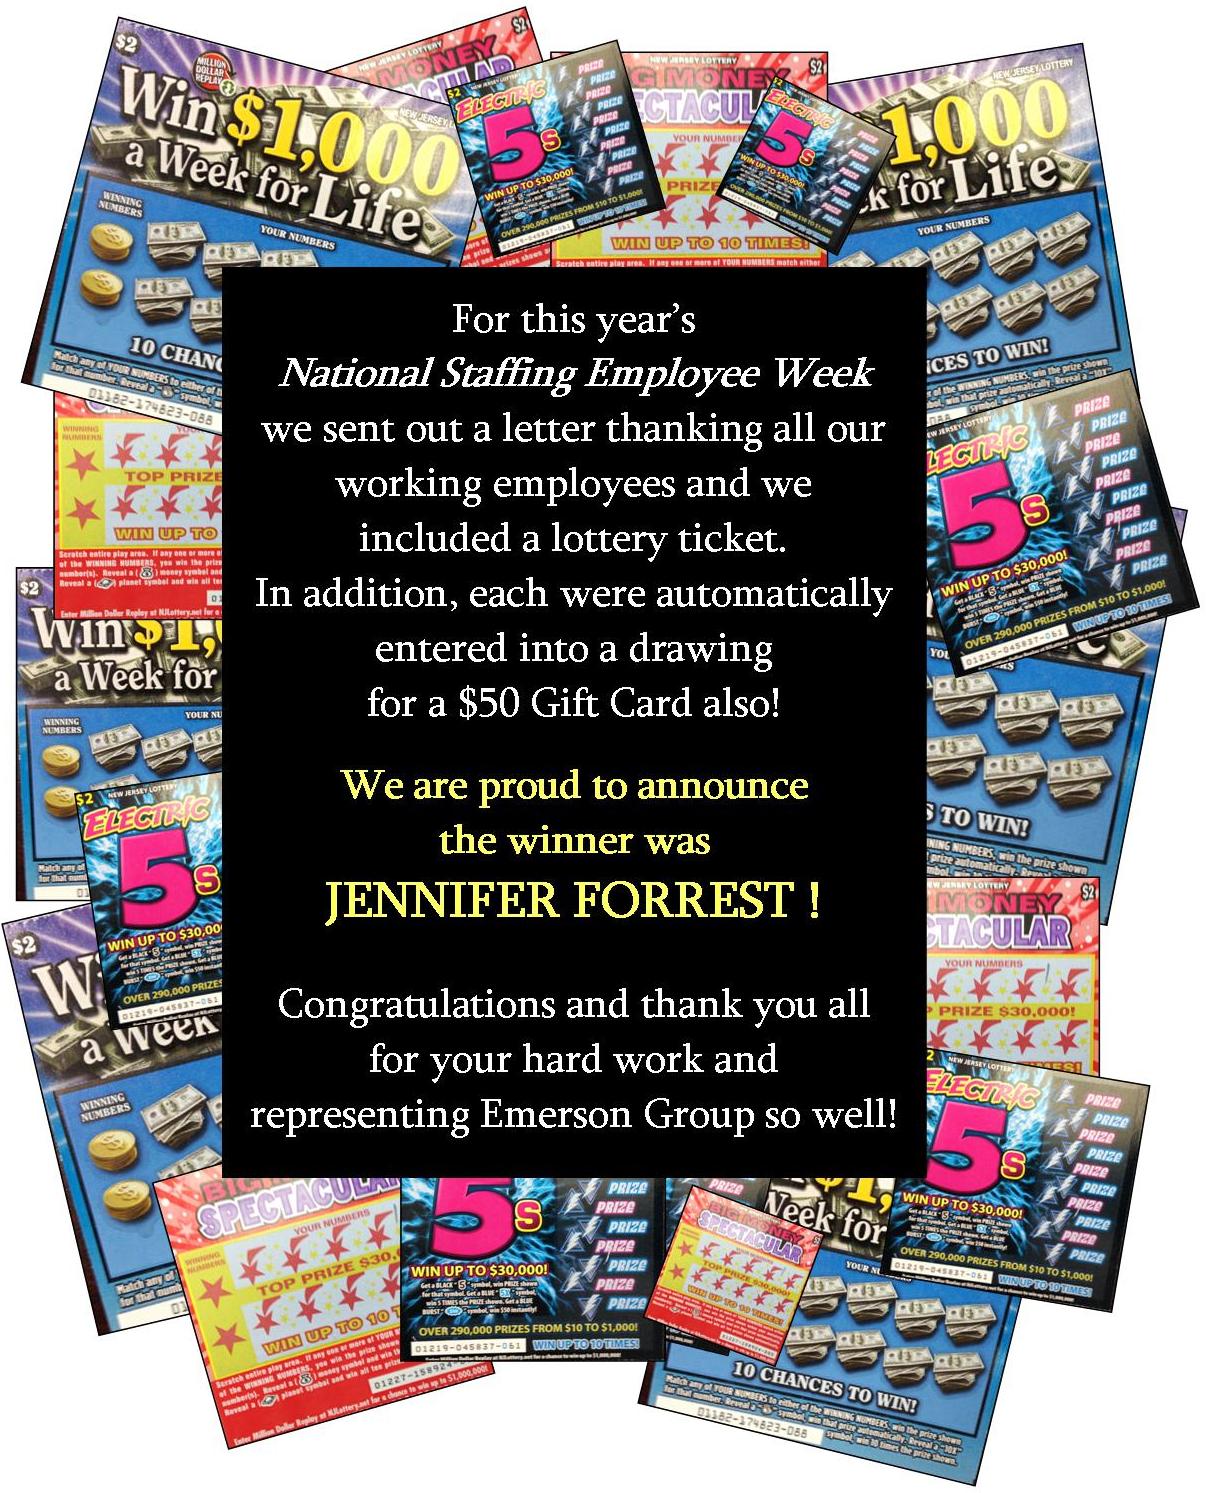 National Staffing Week lottery winner gift card